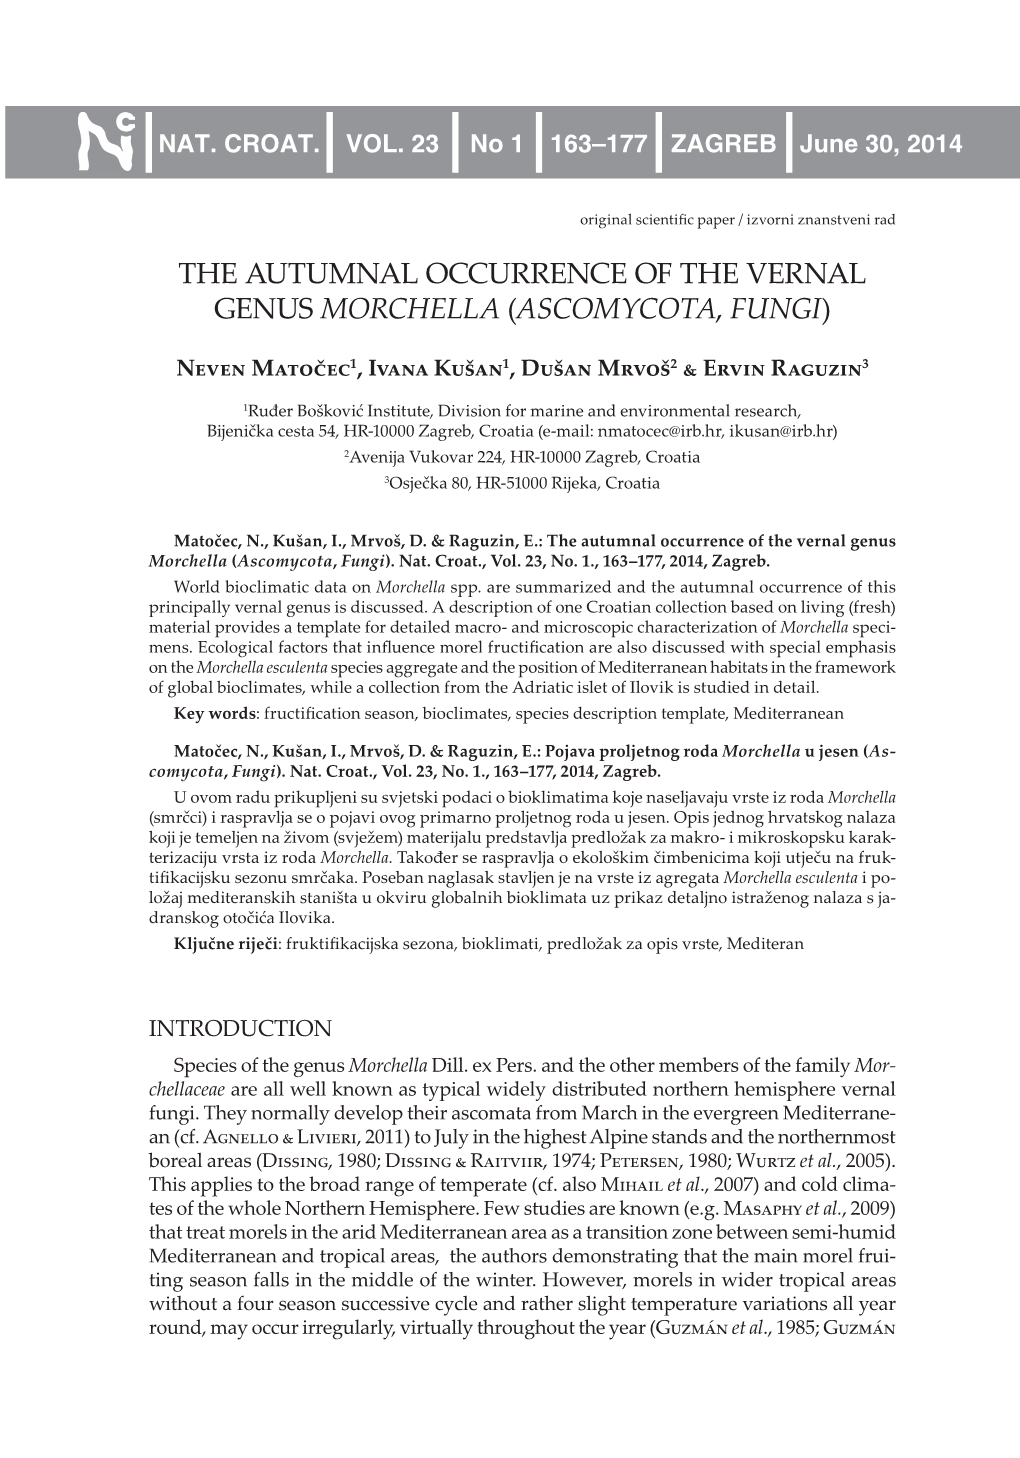 The Autumnal Occurrence of the Vernal Genus Morchella (Ascomycota, Fungi)